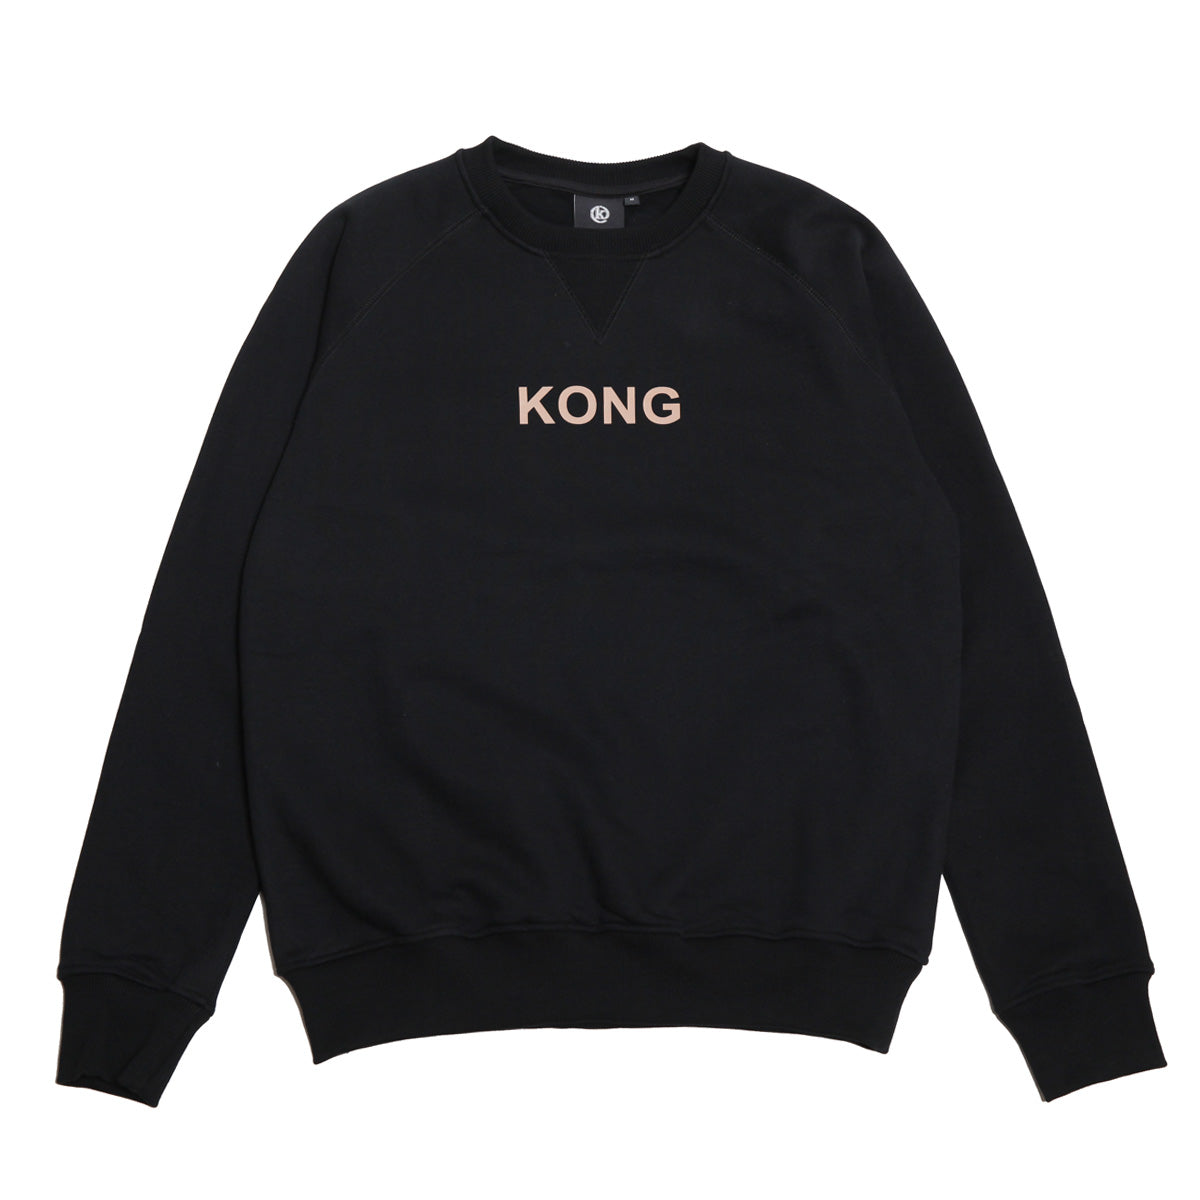 Kong Chain Link Sweatshirt Black